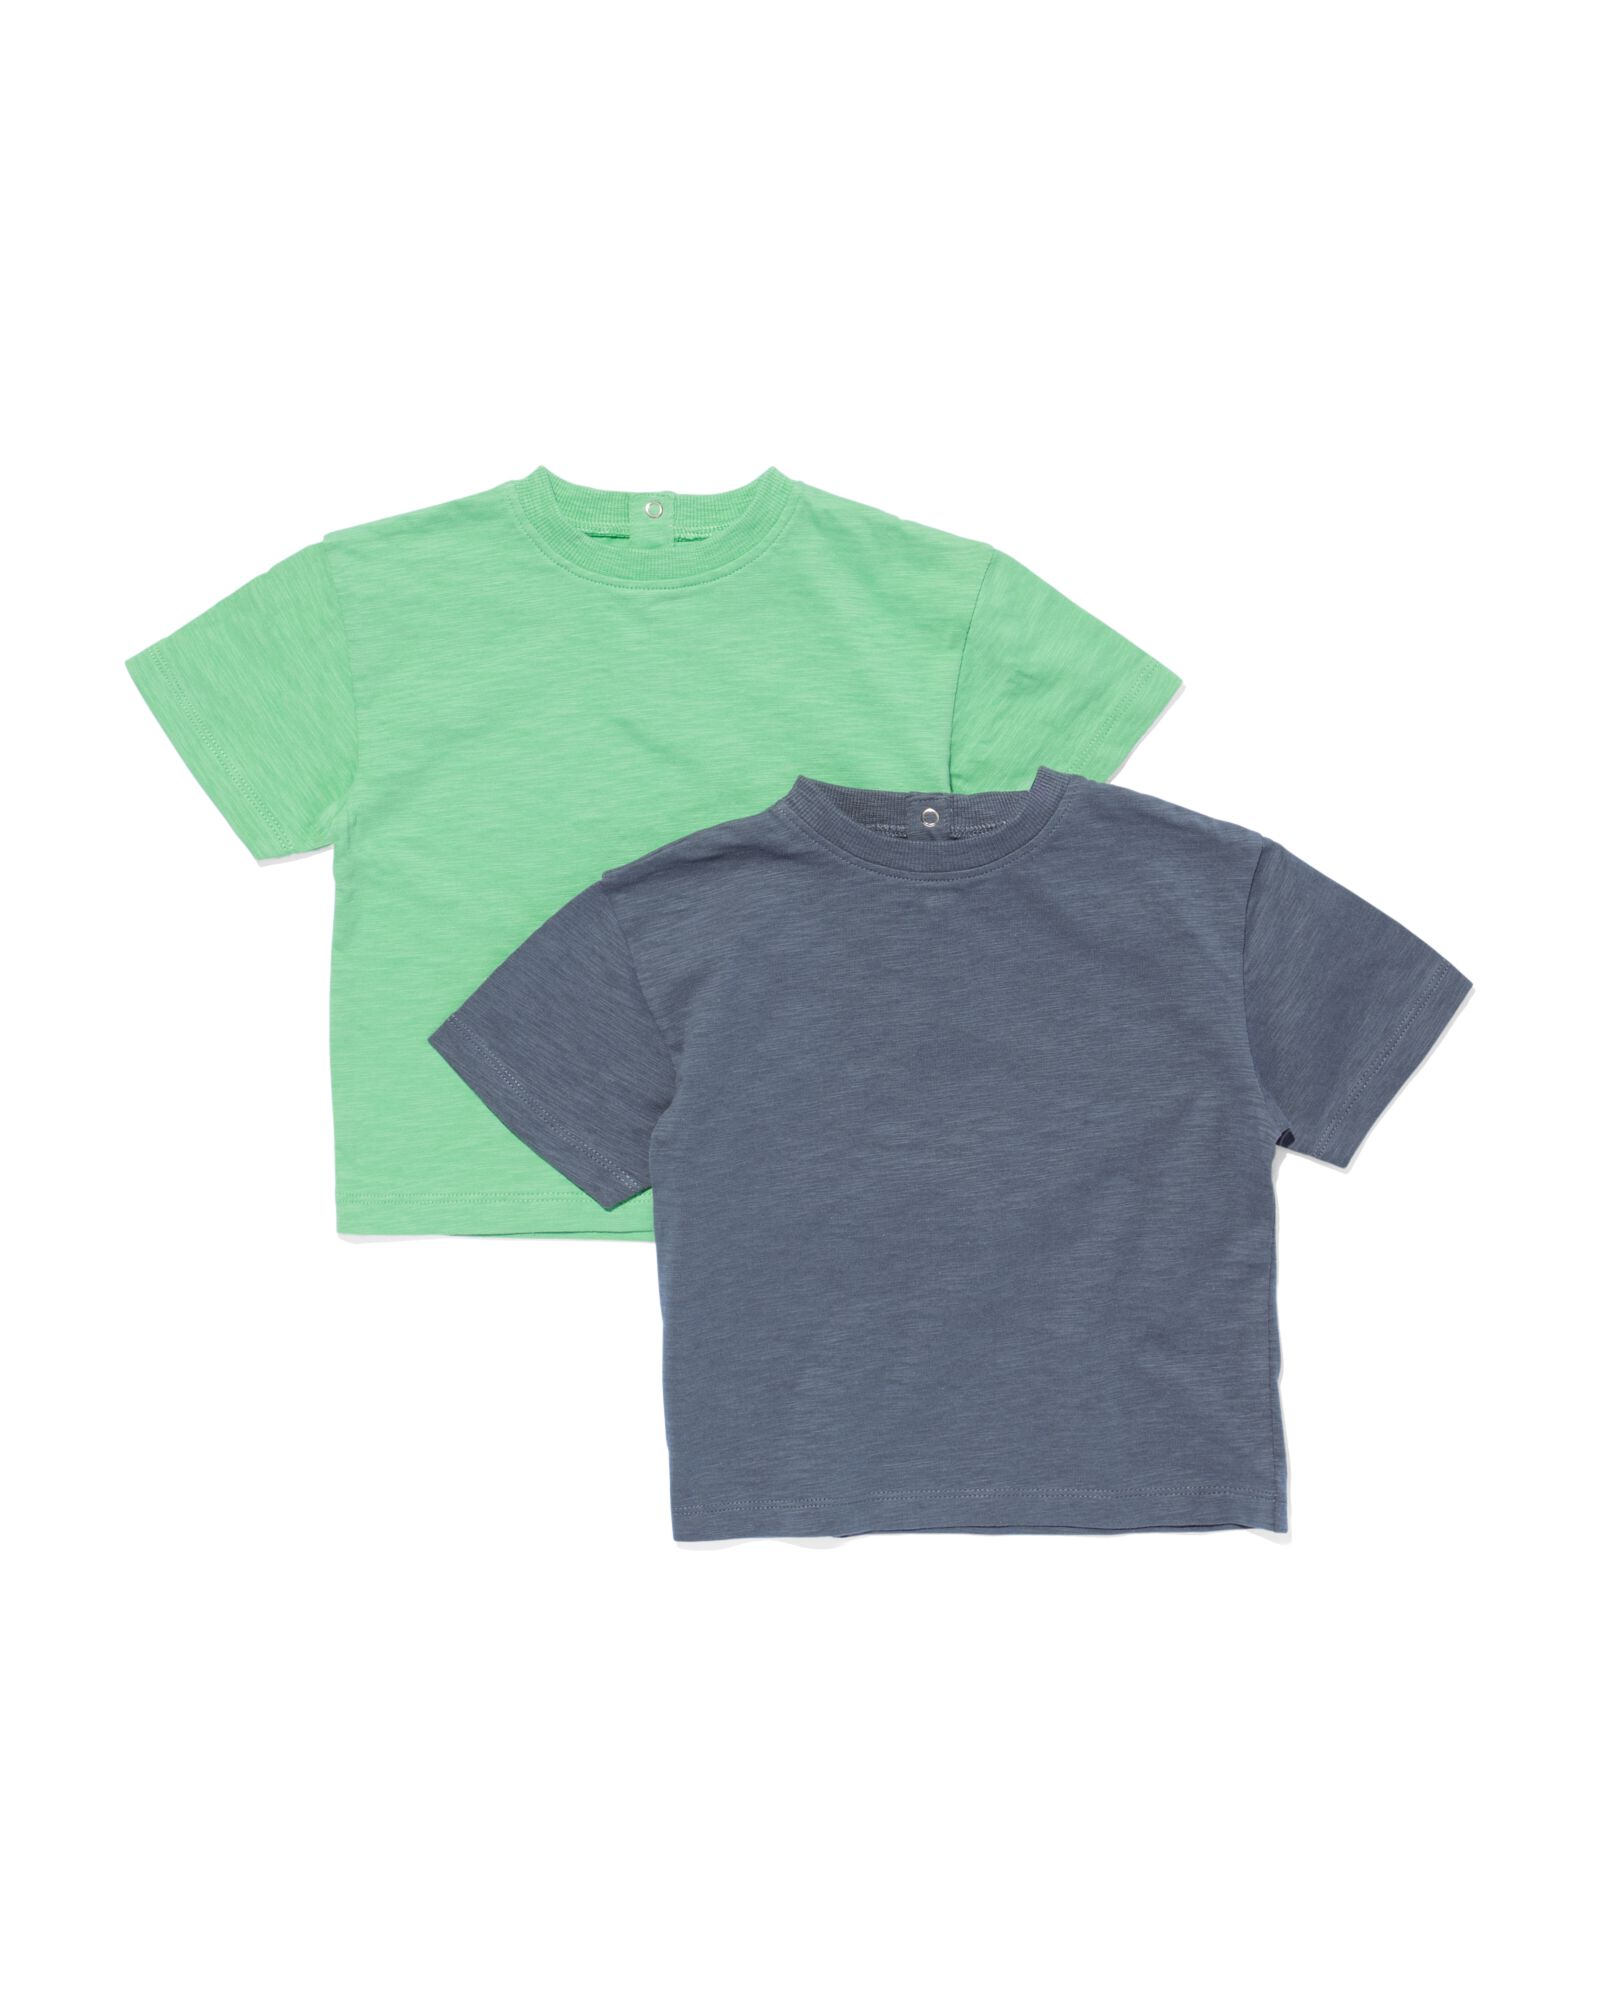 Image of HEMA Baby T-shirts - 2 Stuks Groen (groen)